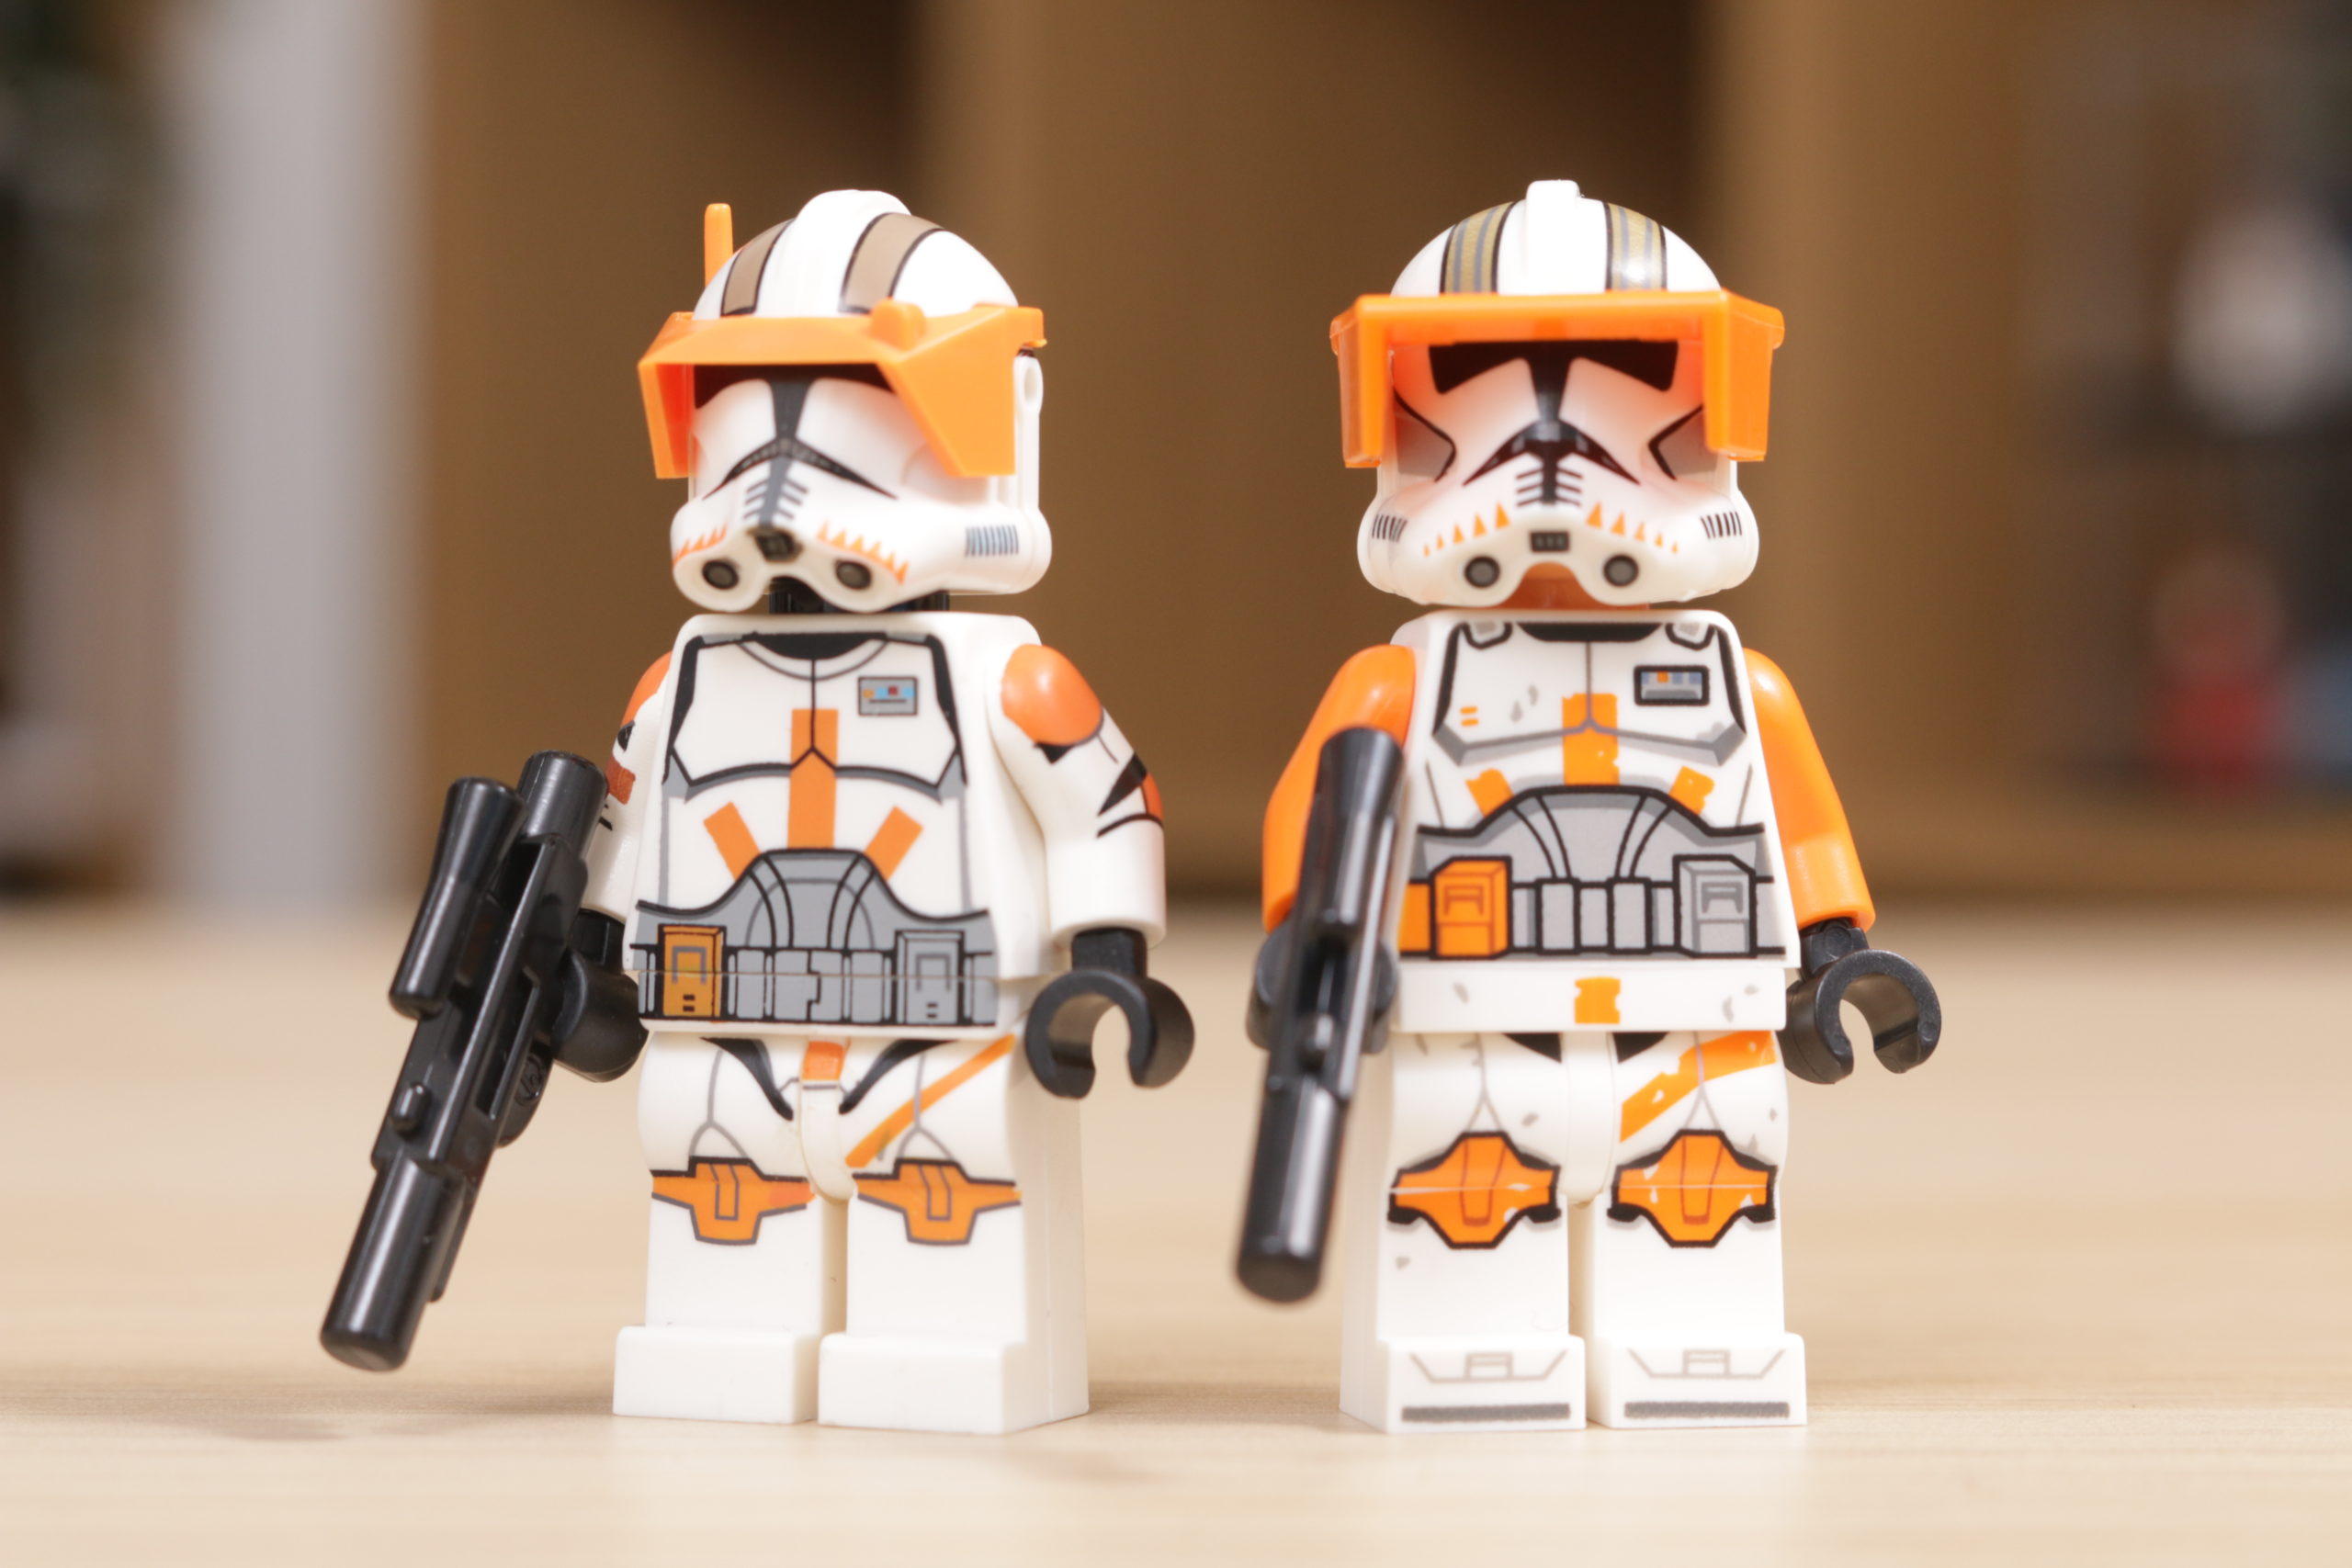 The LEGO Star Wars Commander Cody minifigure deserve